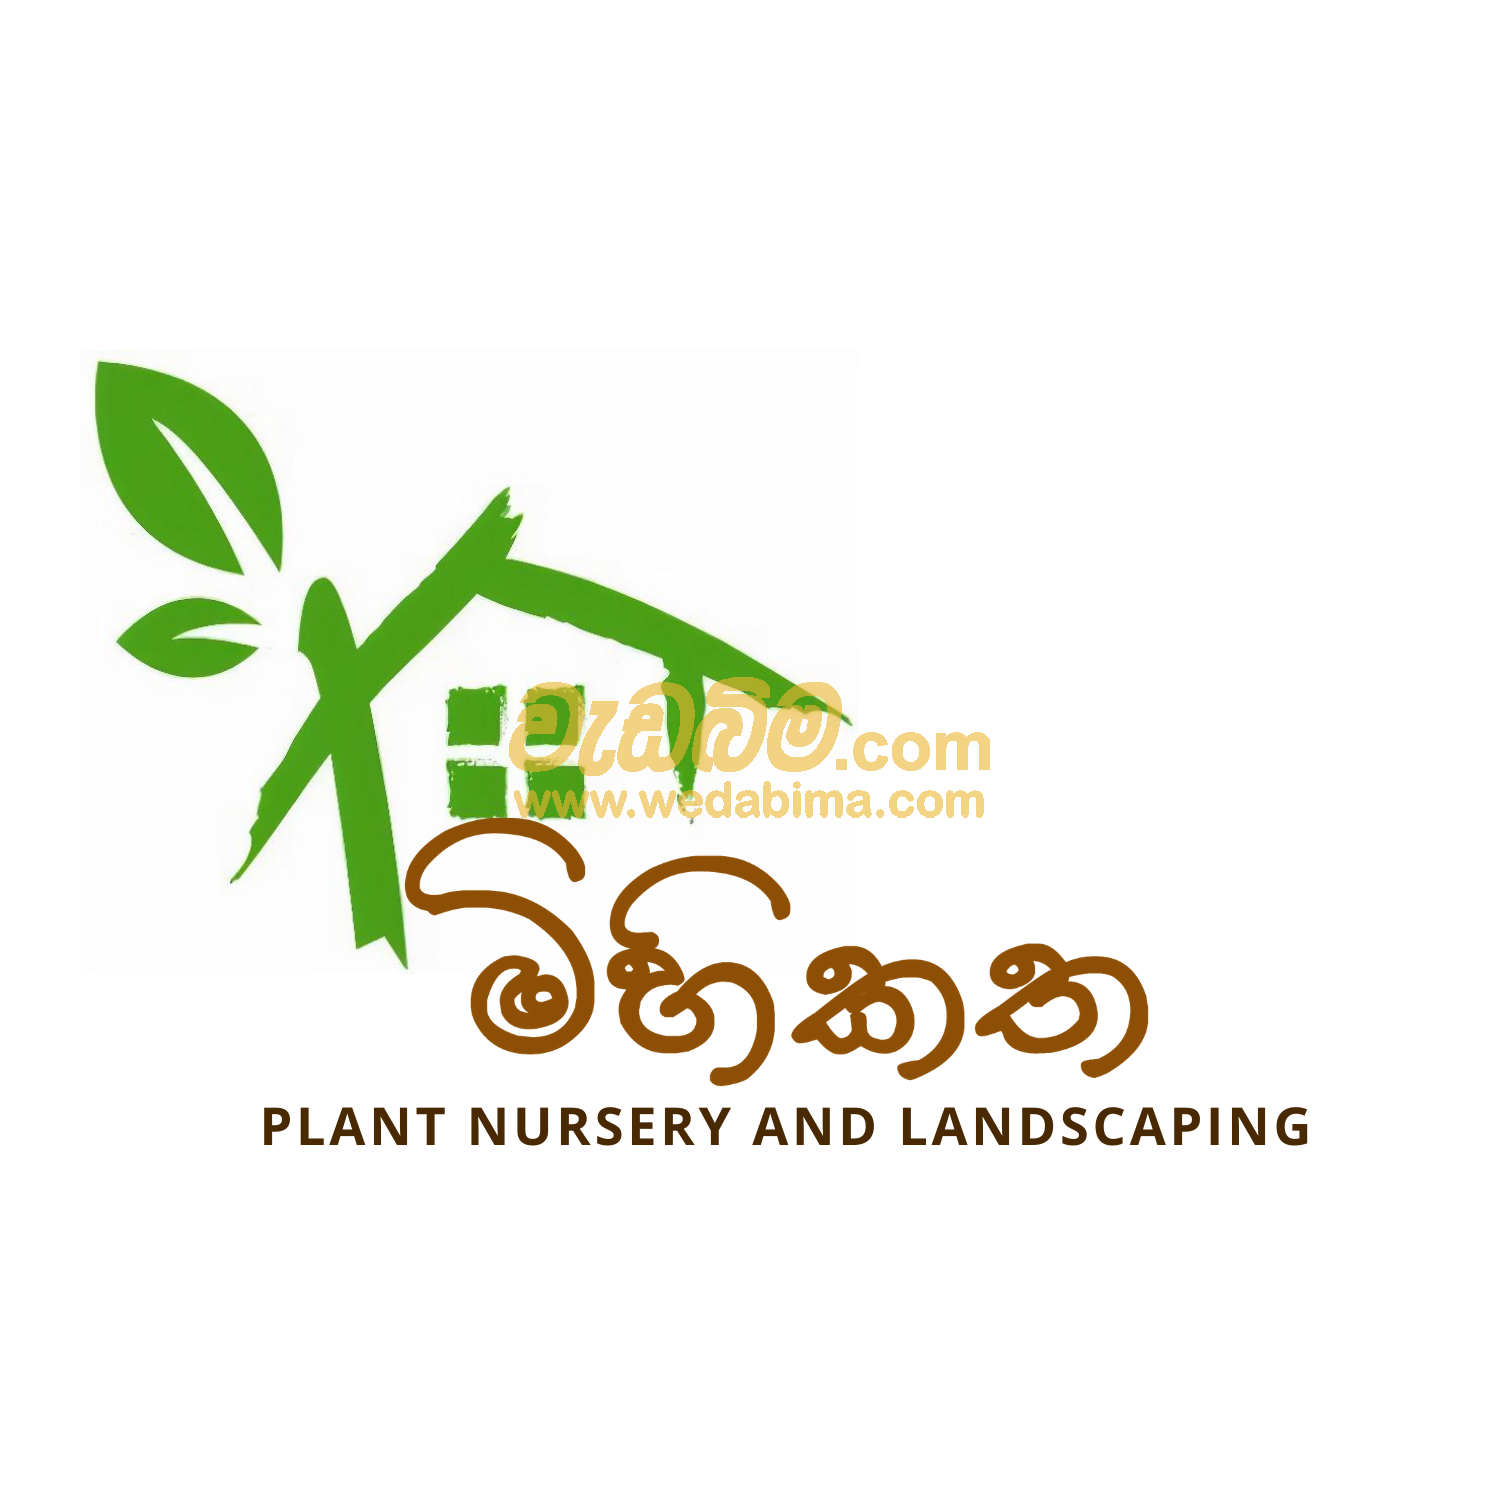 Mihikatha Landscaping (Pvt) Ltd